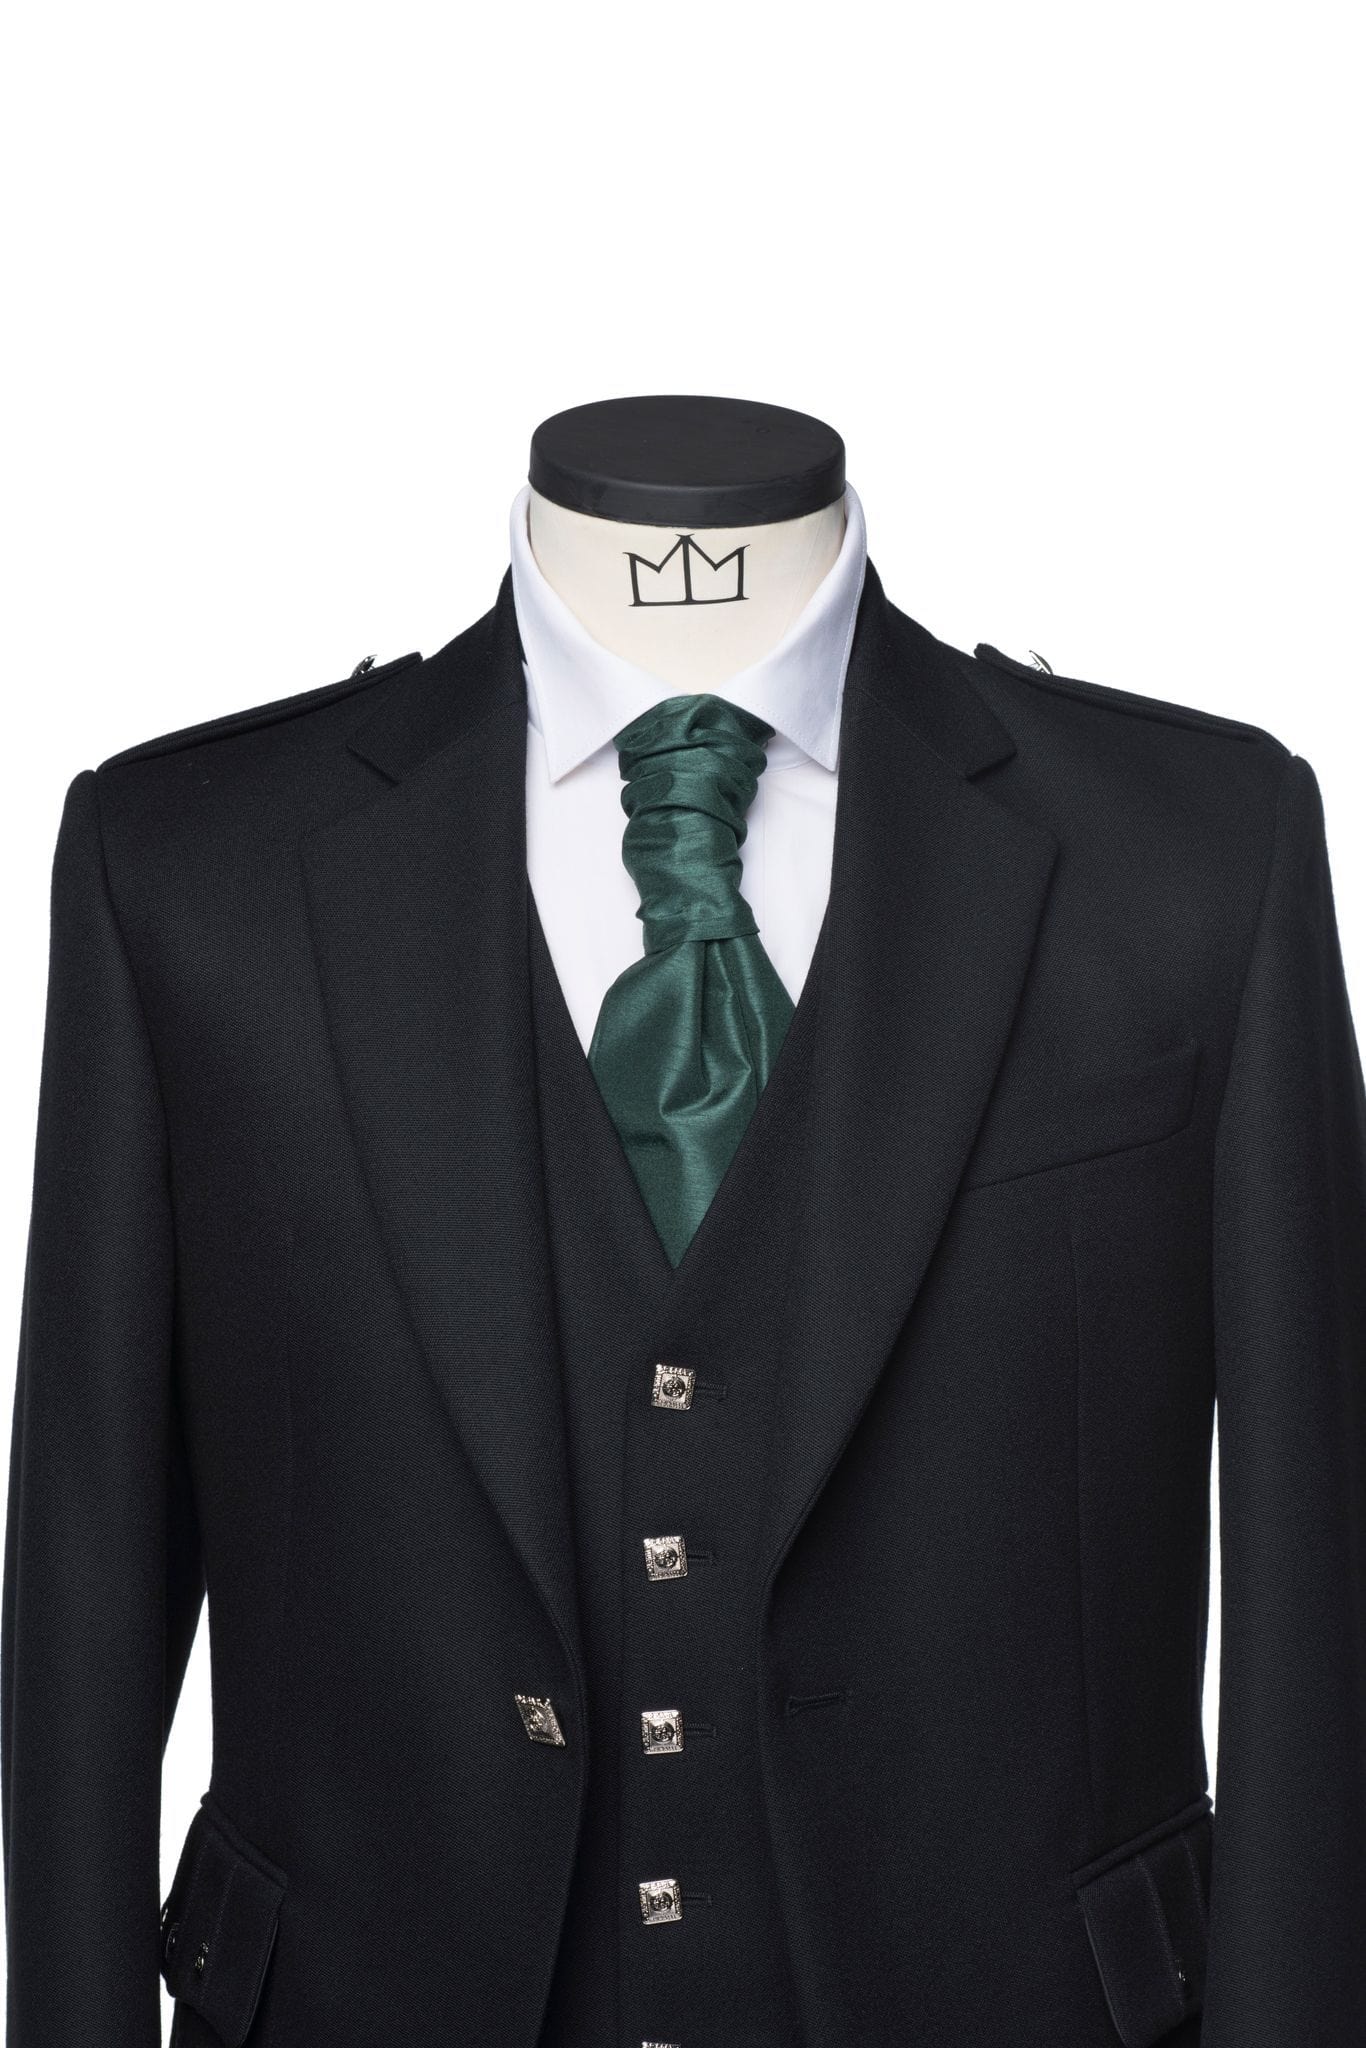 Argyll Kilt Jacket and 5 Button Waistcoat - MacGregor and MacDuff